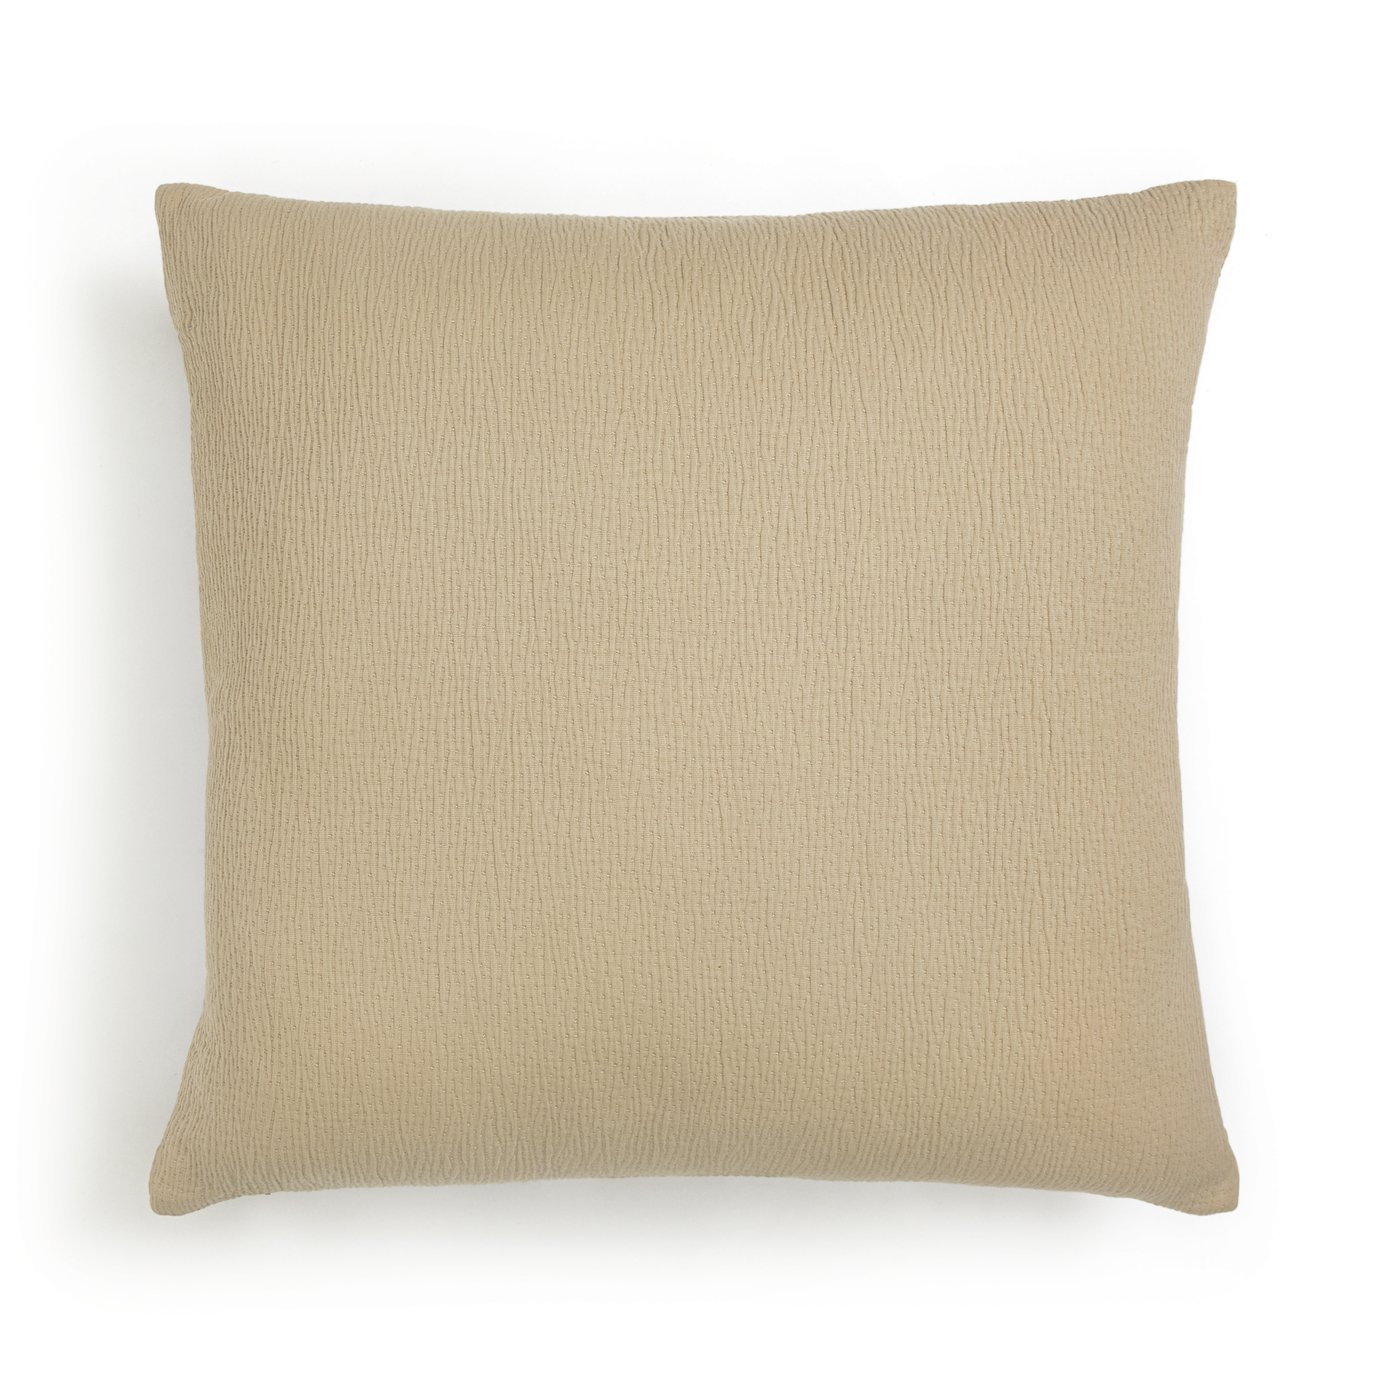 Habitat Textured Plain Cushion - Cream  - 50x50cm